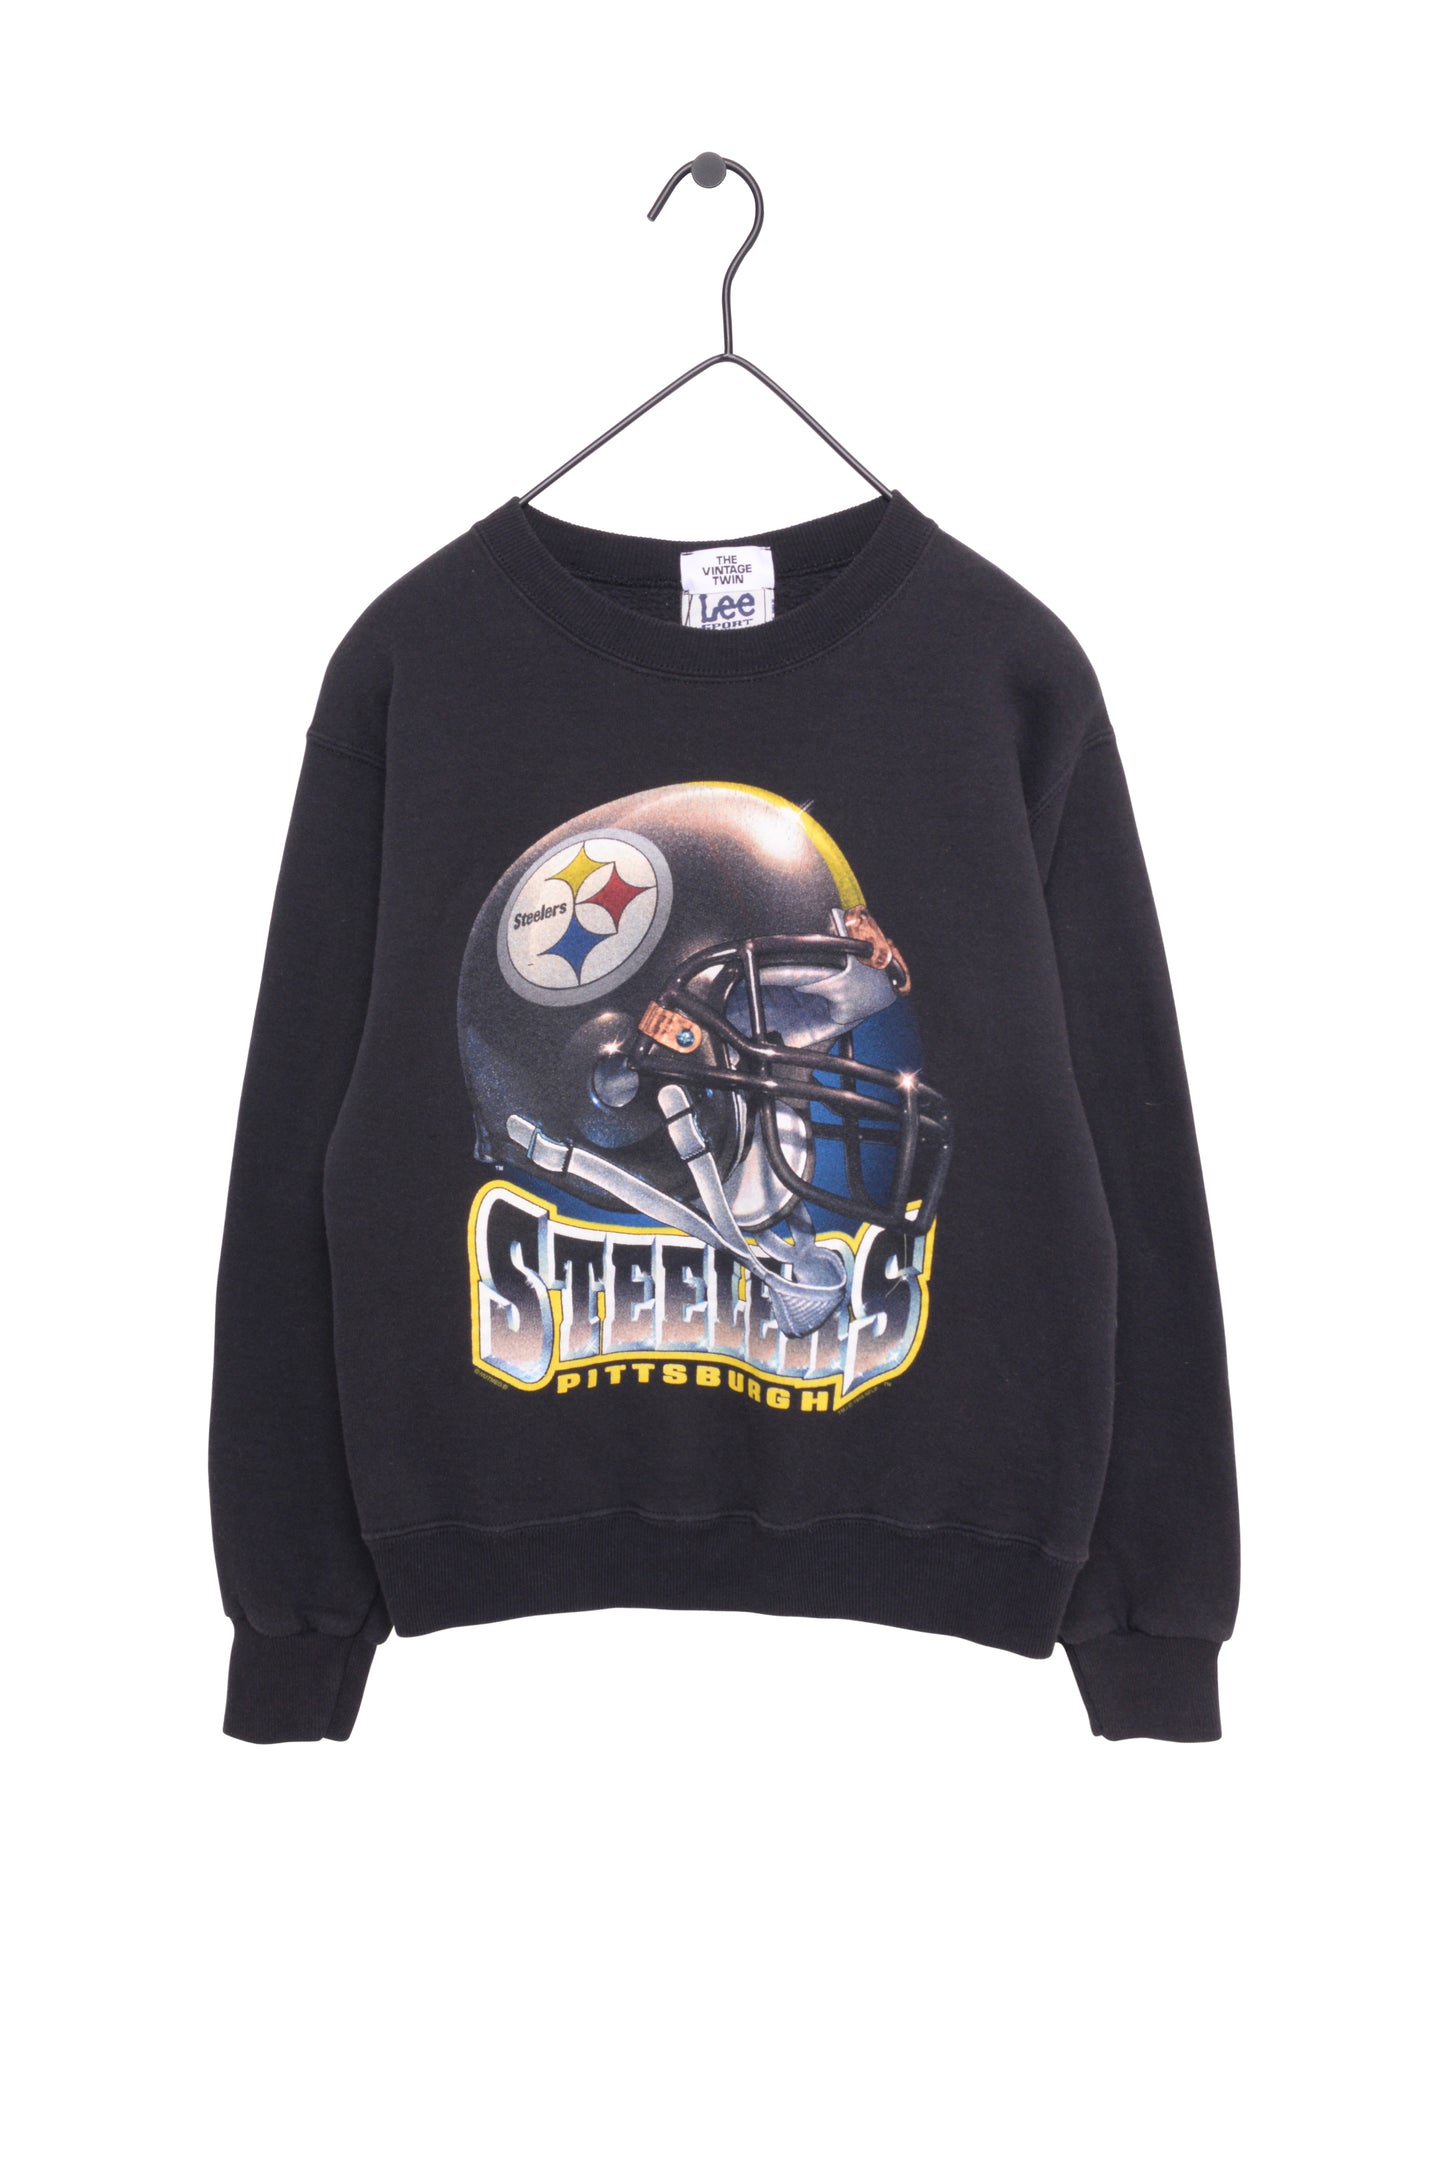 1995 Pittsburgh Steelers Sweatshirt